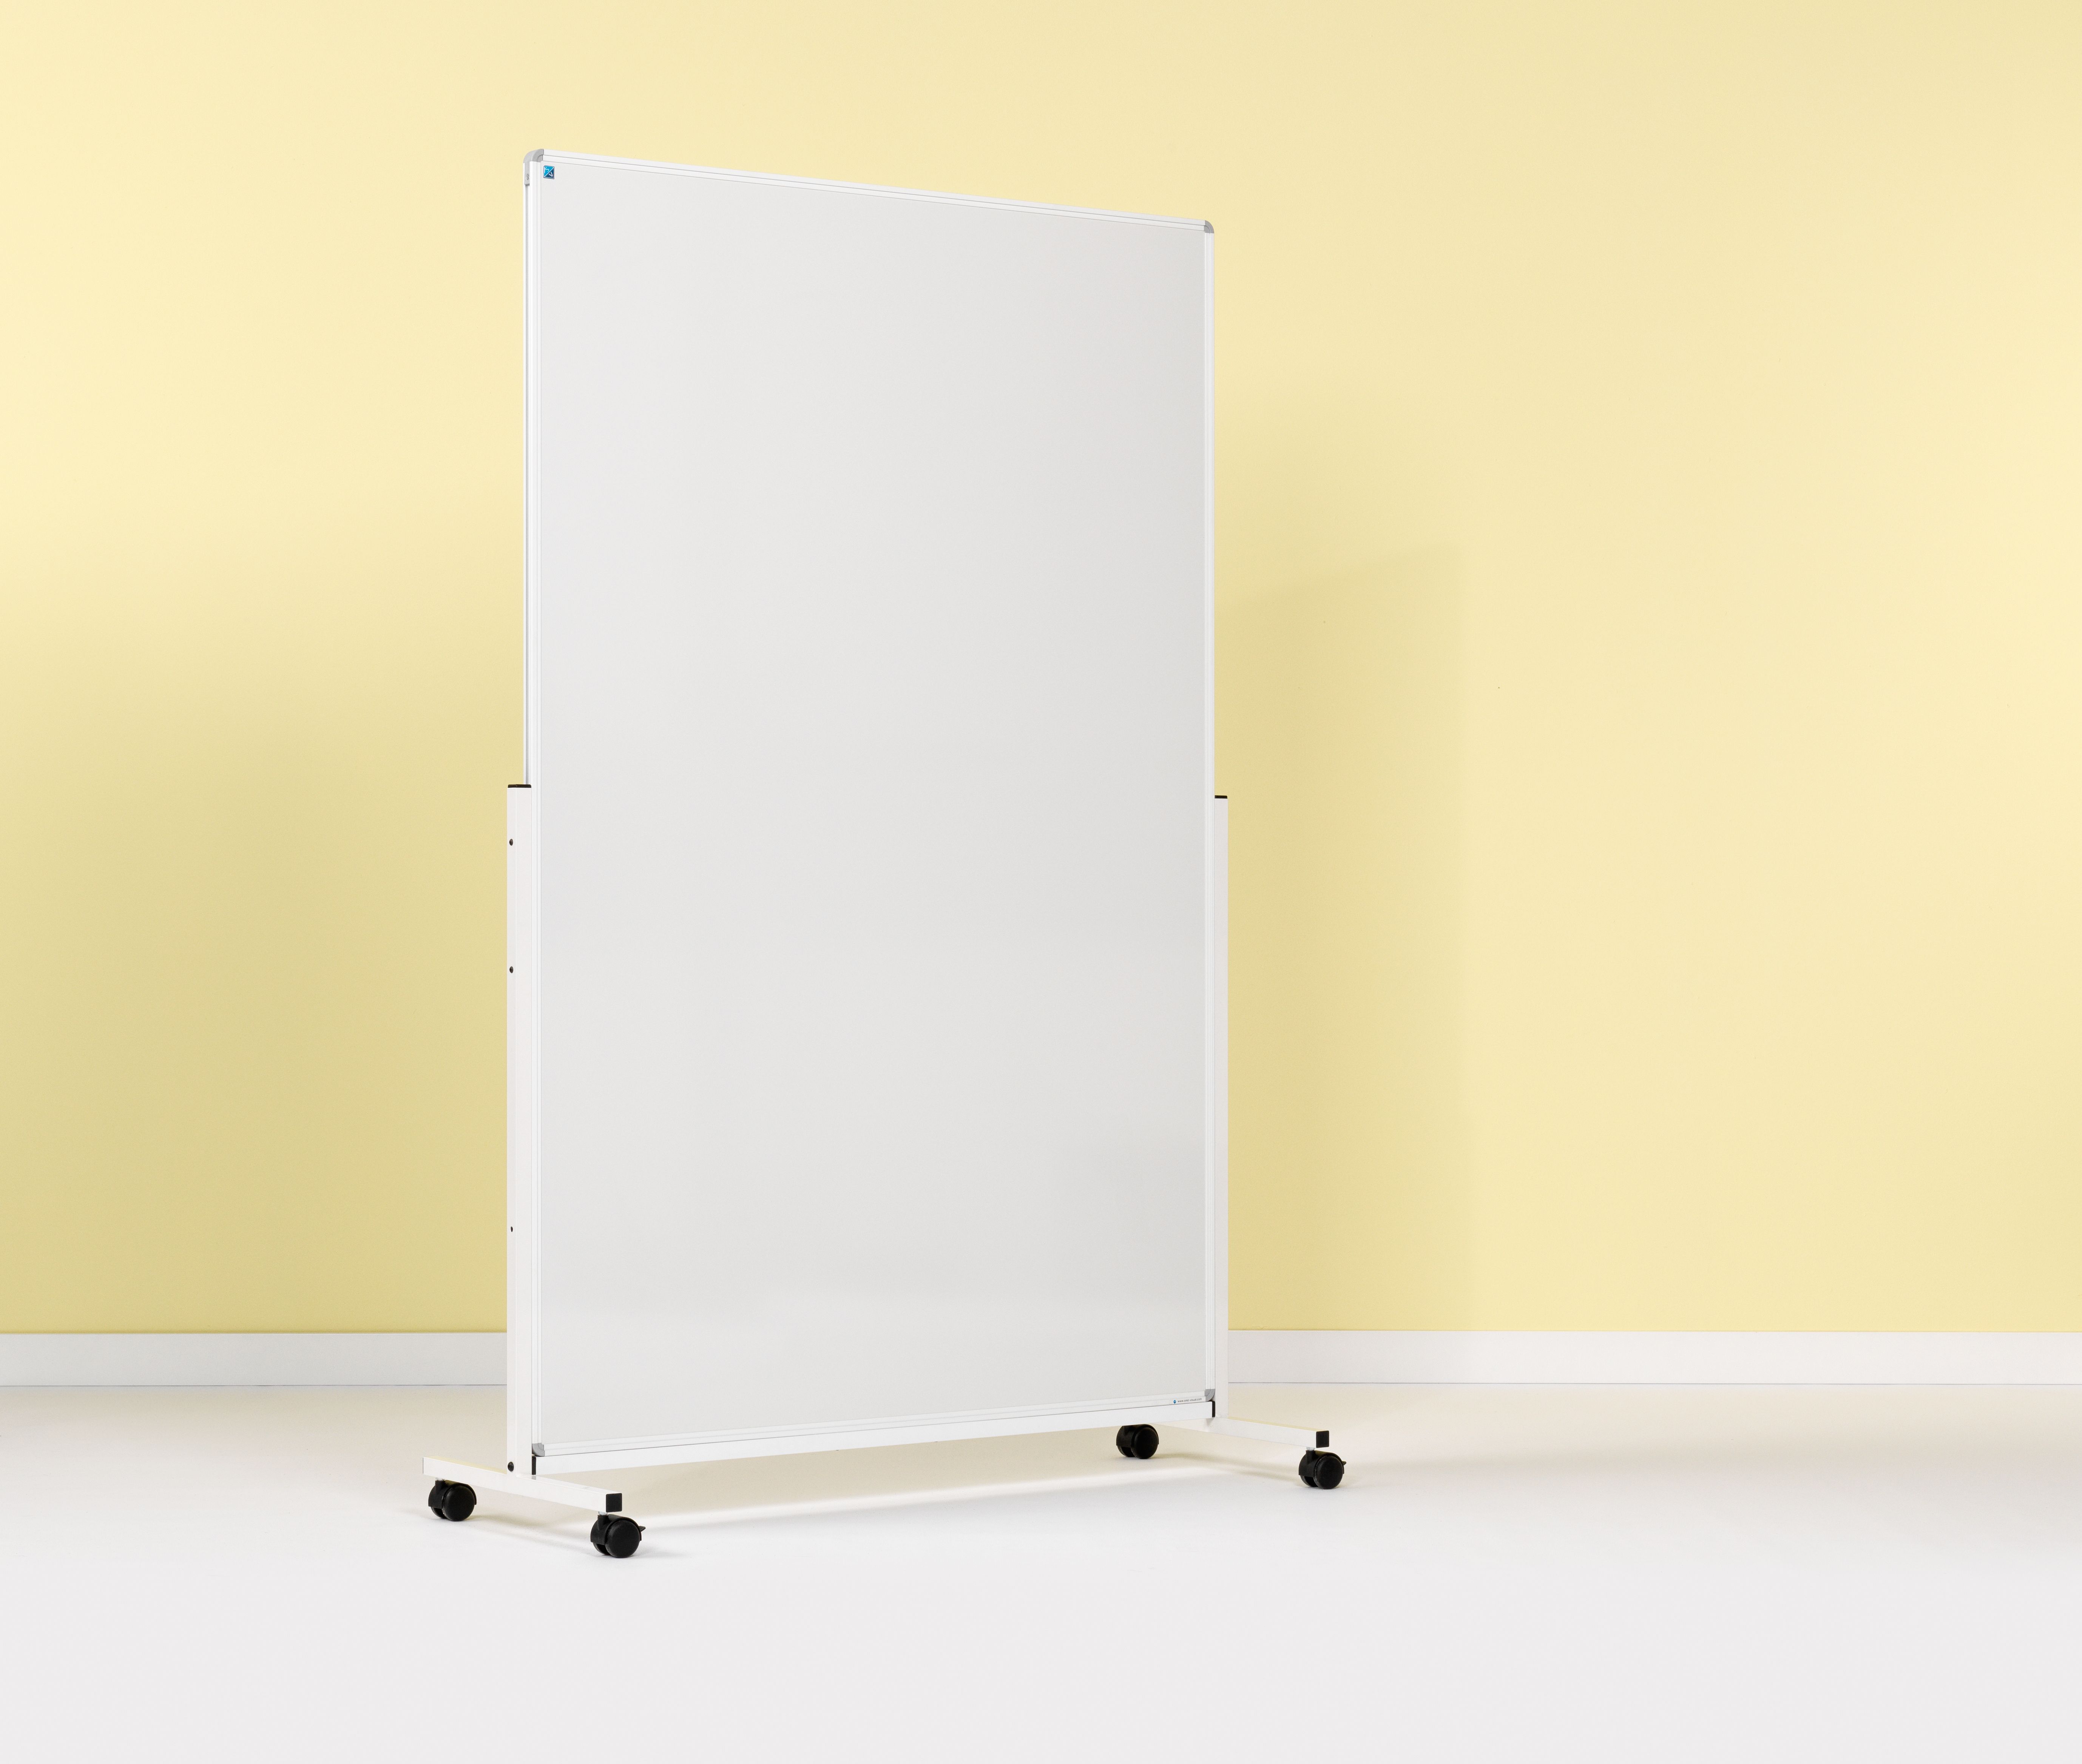 Smit Visual mobiel whiteboard, gelakt staal wit - 180x120 cm